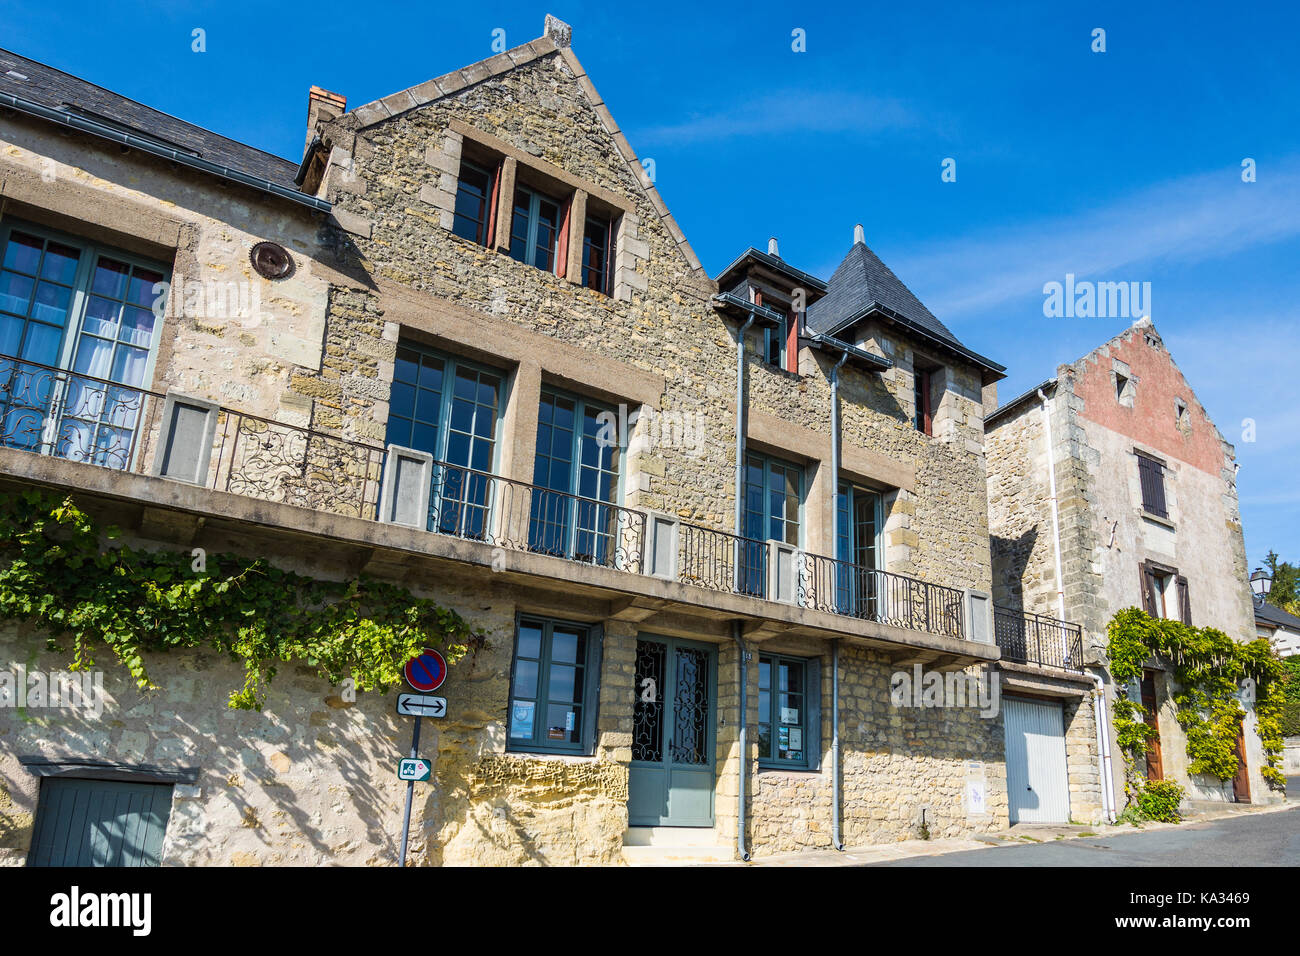 Row of houses with balcony, Chinon, France. Stock Photo